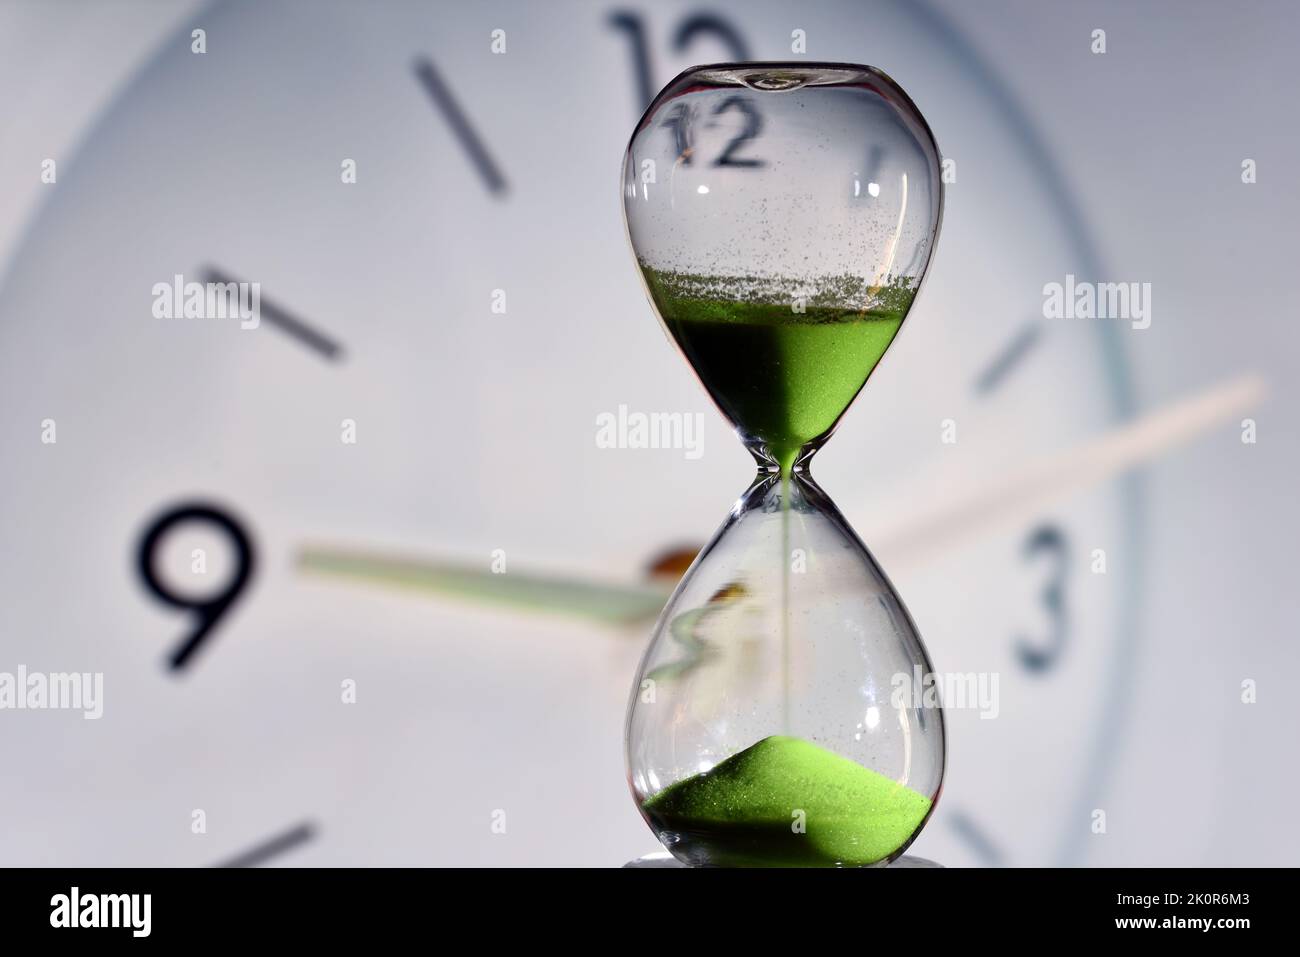 Reloj de arena y reloj redondo midiendo el tiempo Stock Photo